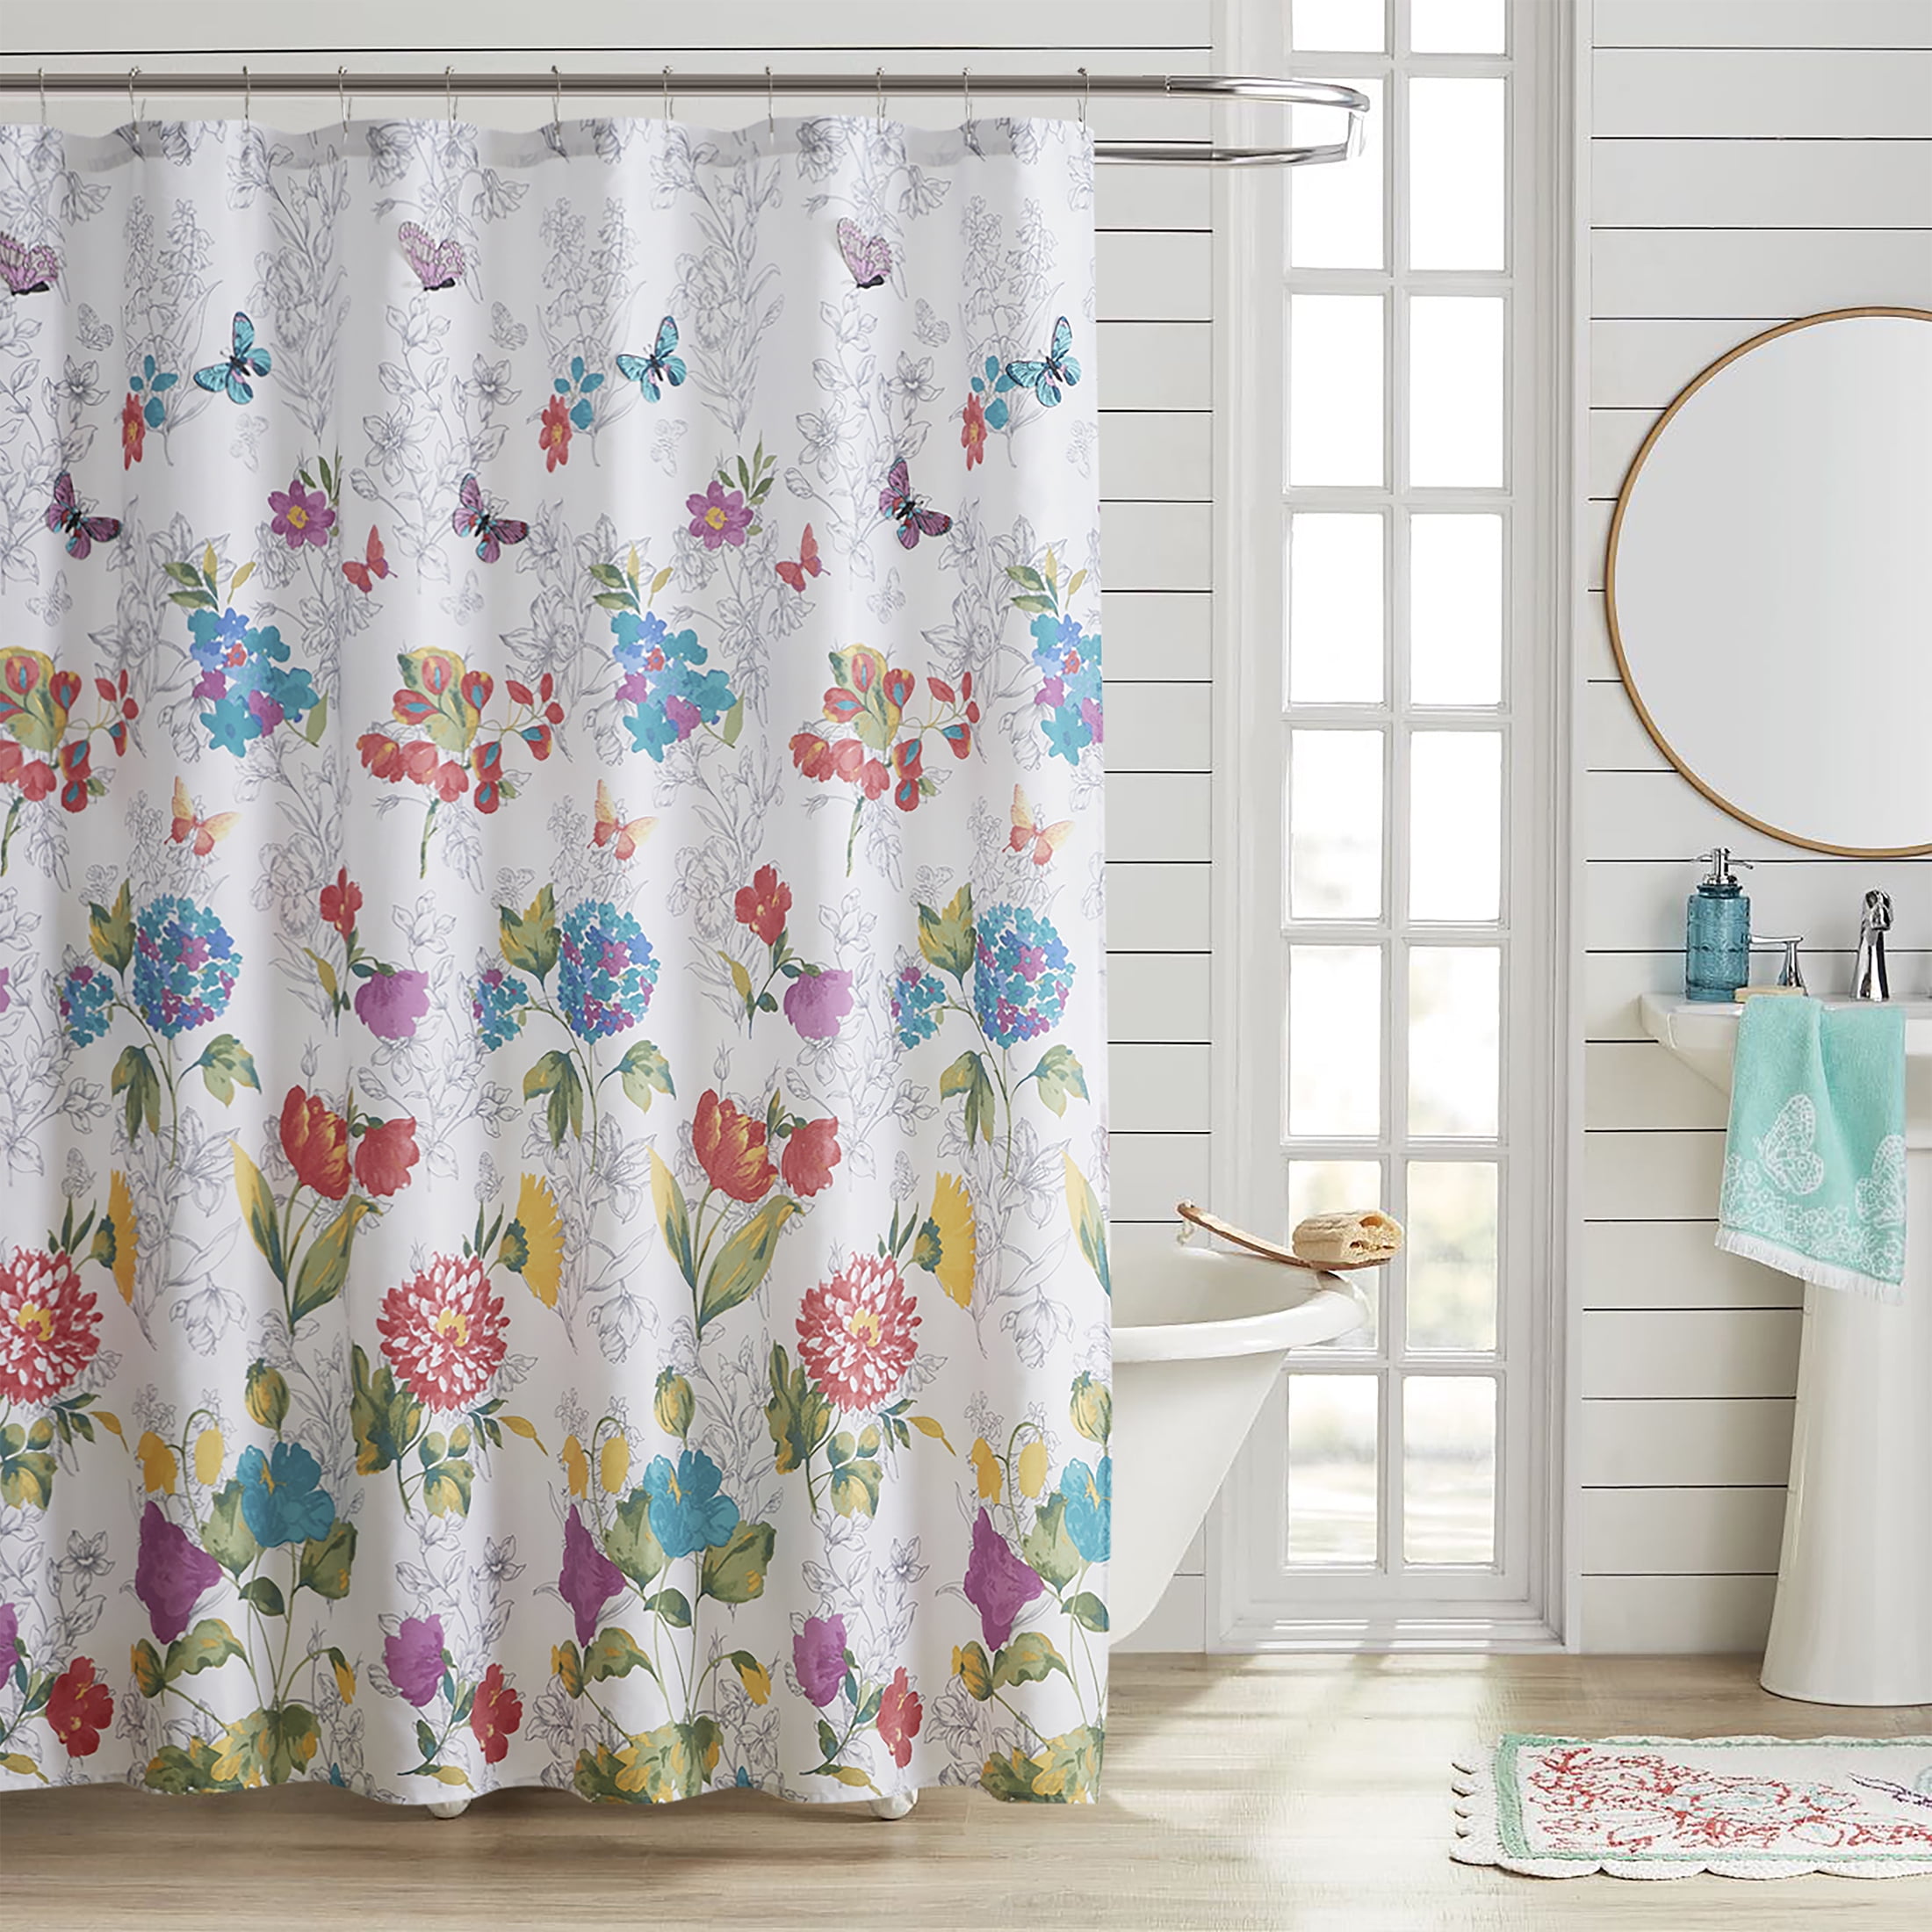 Custom Your Own Pattern Waterproof Fabric Bathroom Decor Shower Curtain Hook Set 